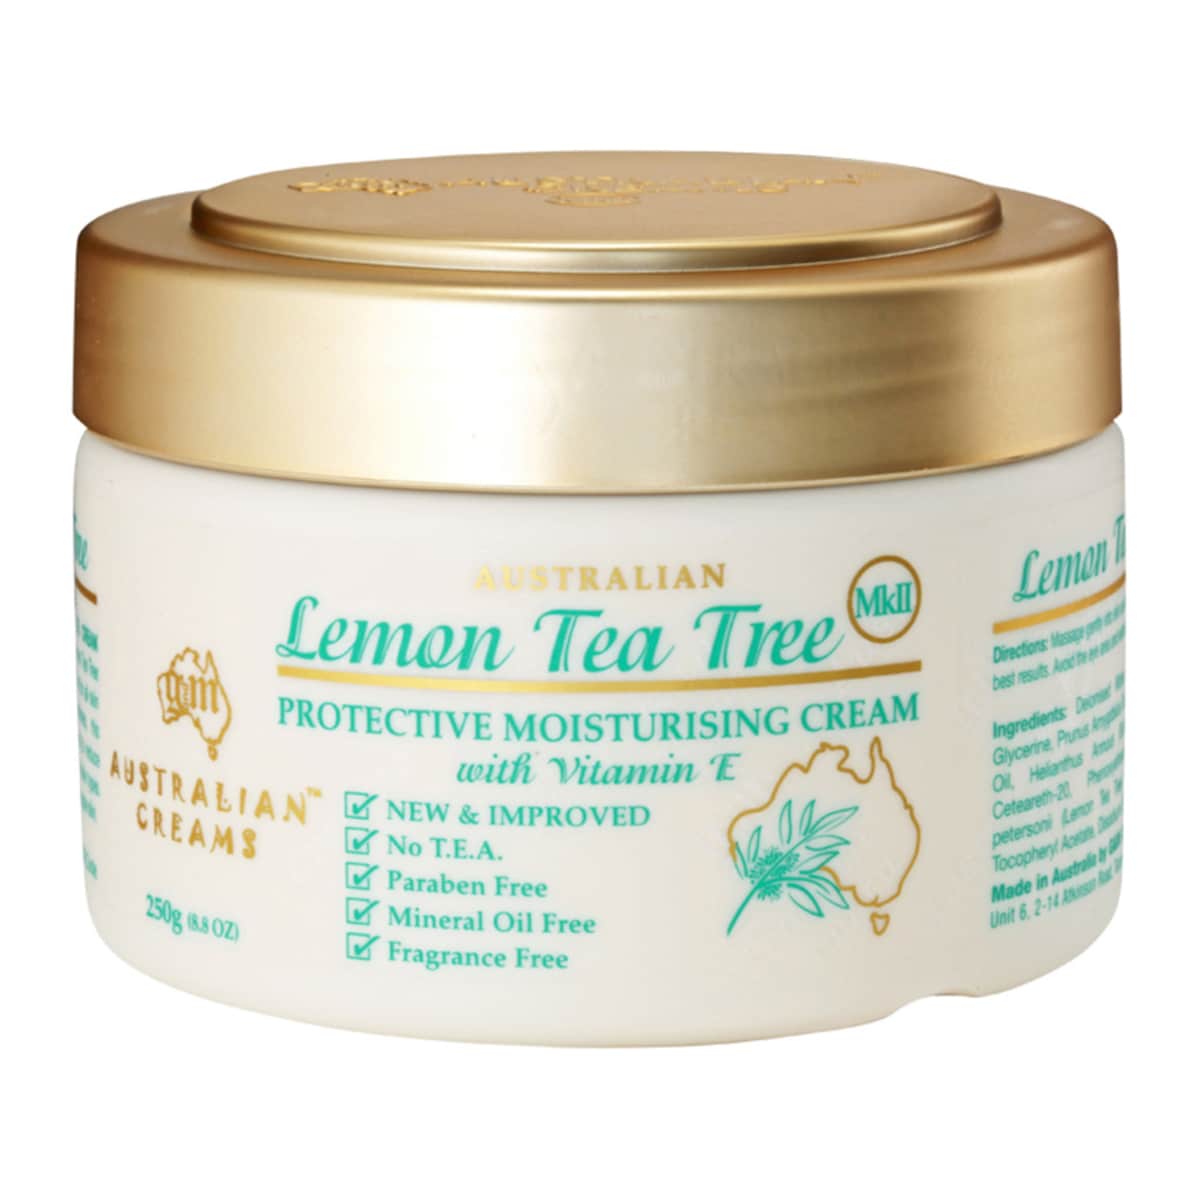 Australian Creams MKII Lemon Tea Tree Moisturising Cream with Vitamin E 250g